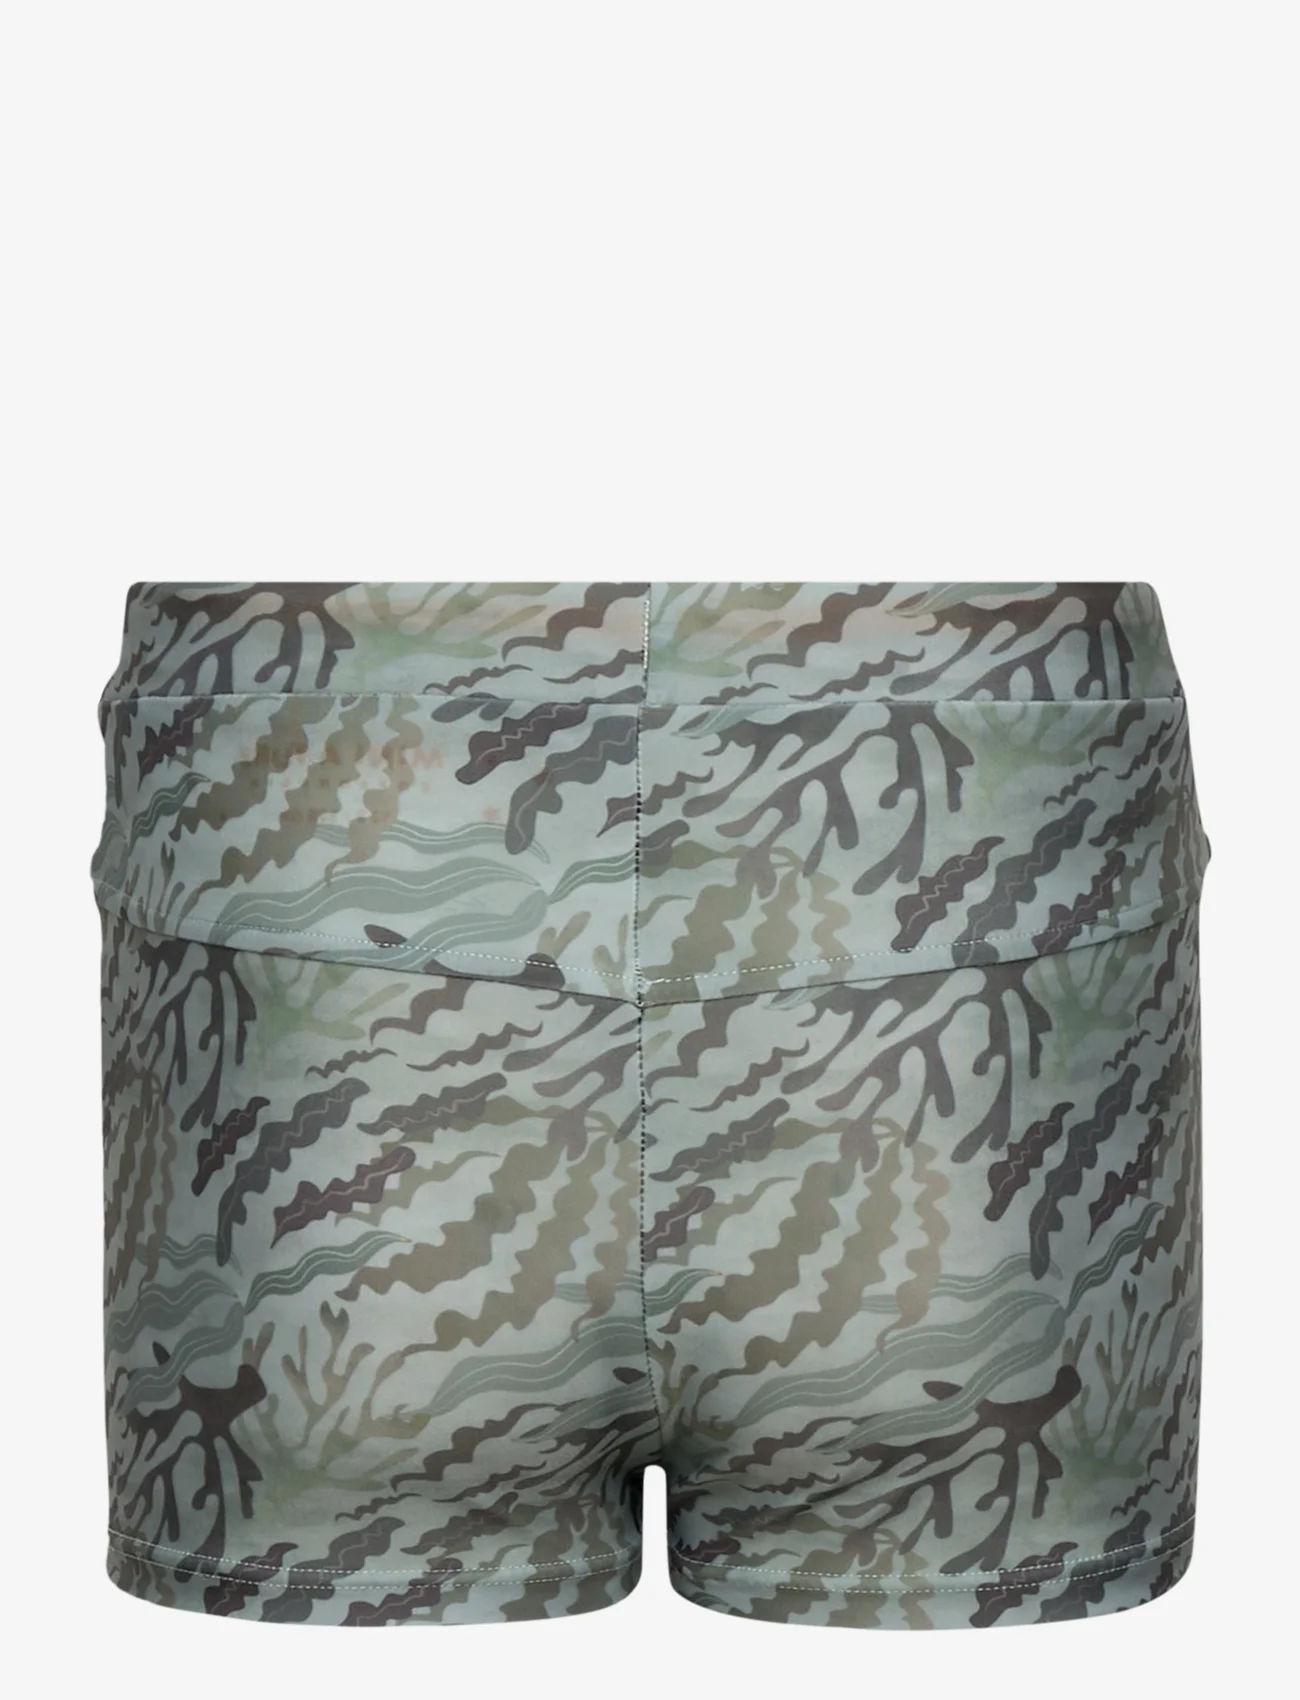 Mini A Ture - Gerryan printed swim shorts - sommerkupp - print sea weed camo - 1